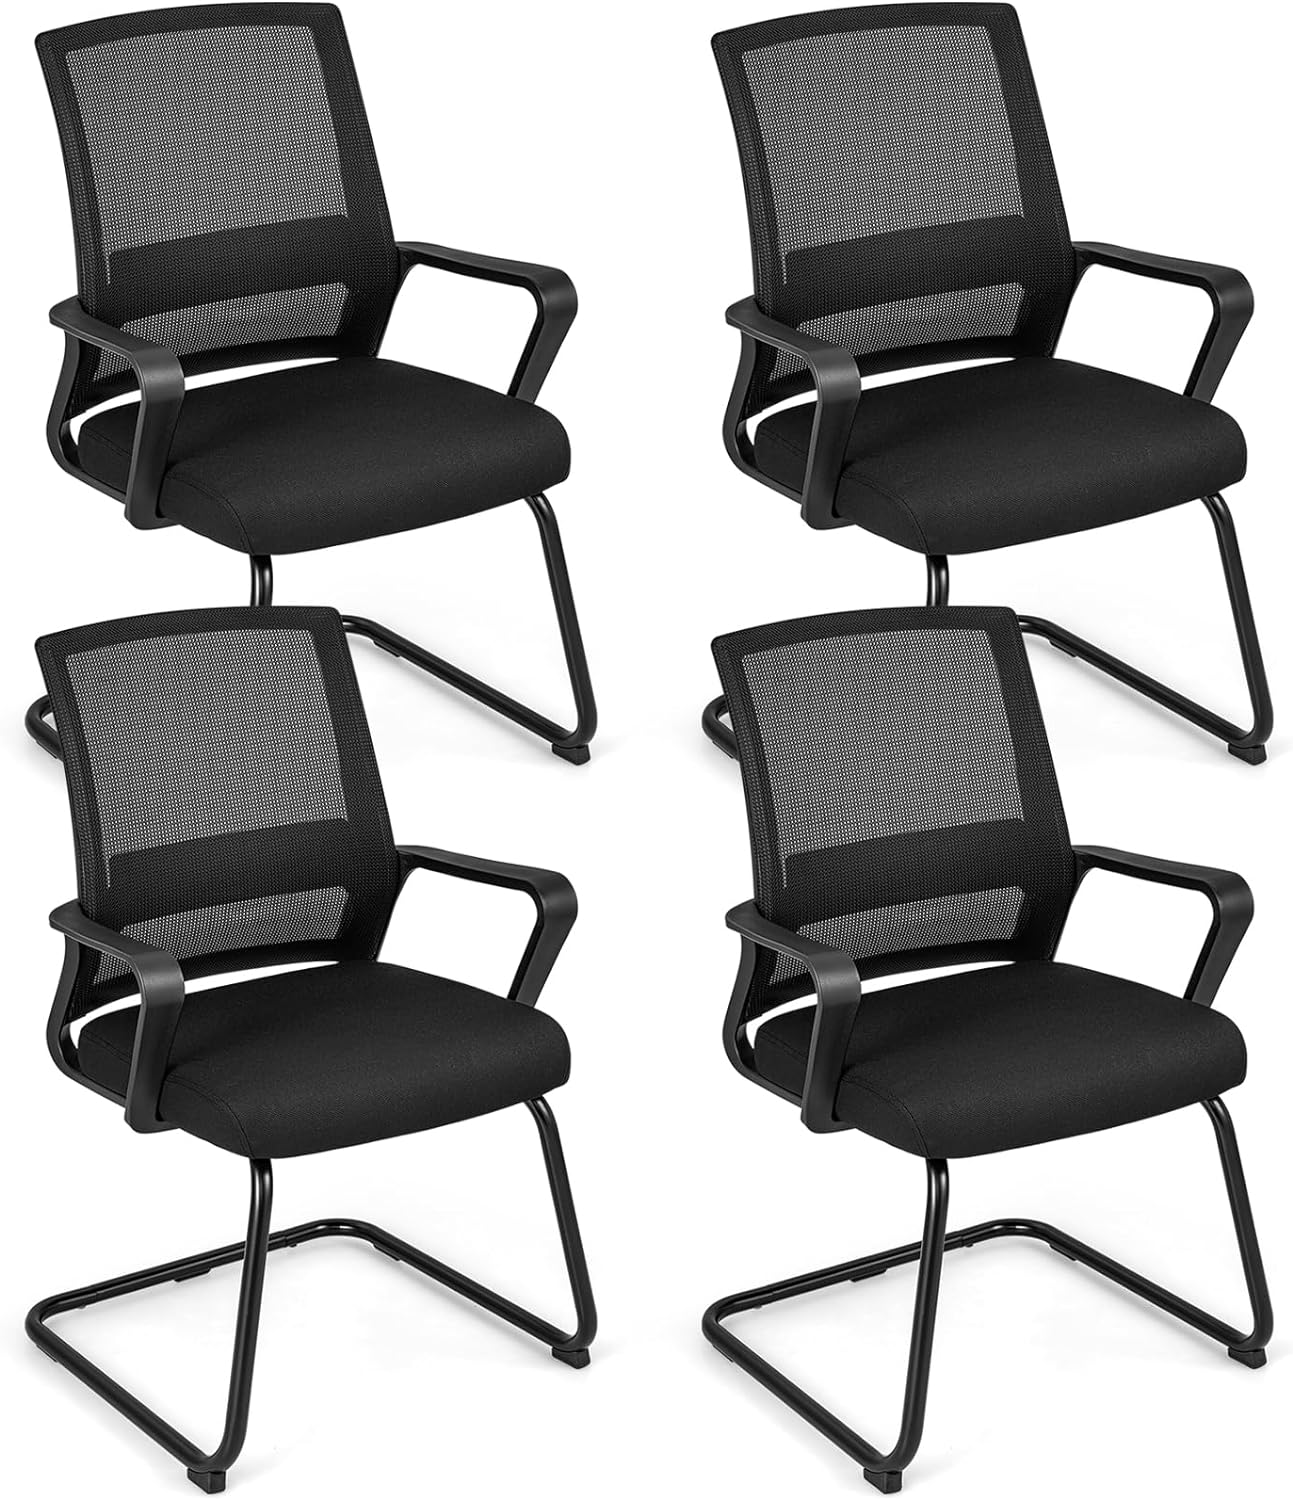 Giantex Office Guest Chair, Office Guest Conference Chair w/Lumbar Support Ergonomic Backrest